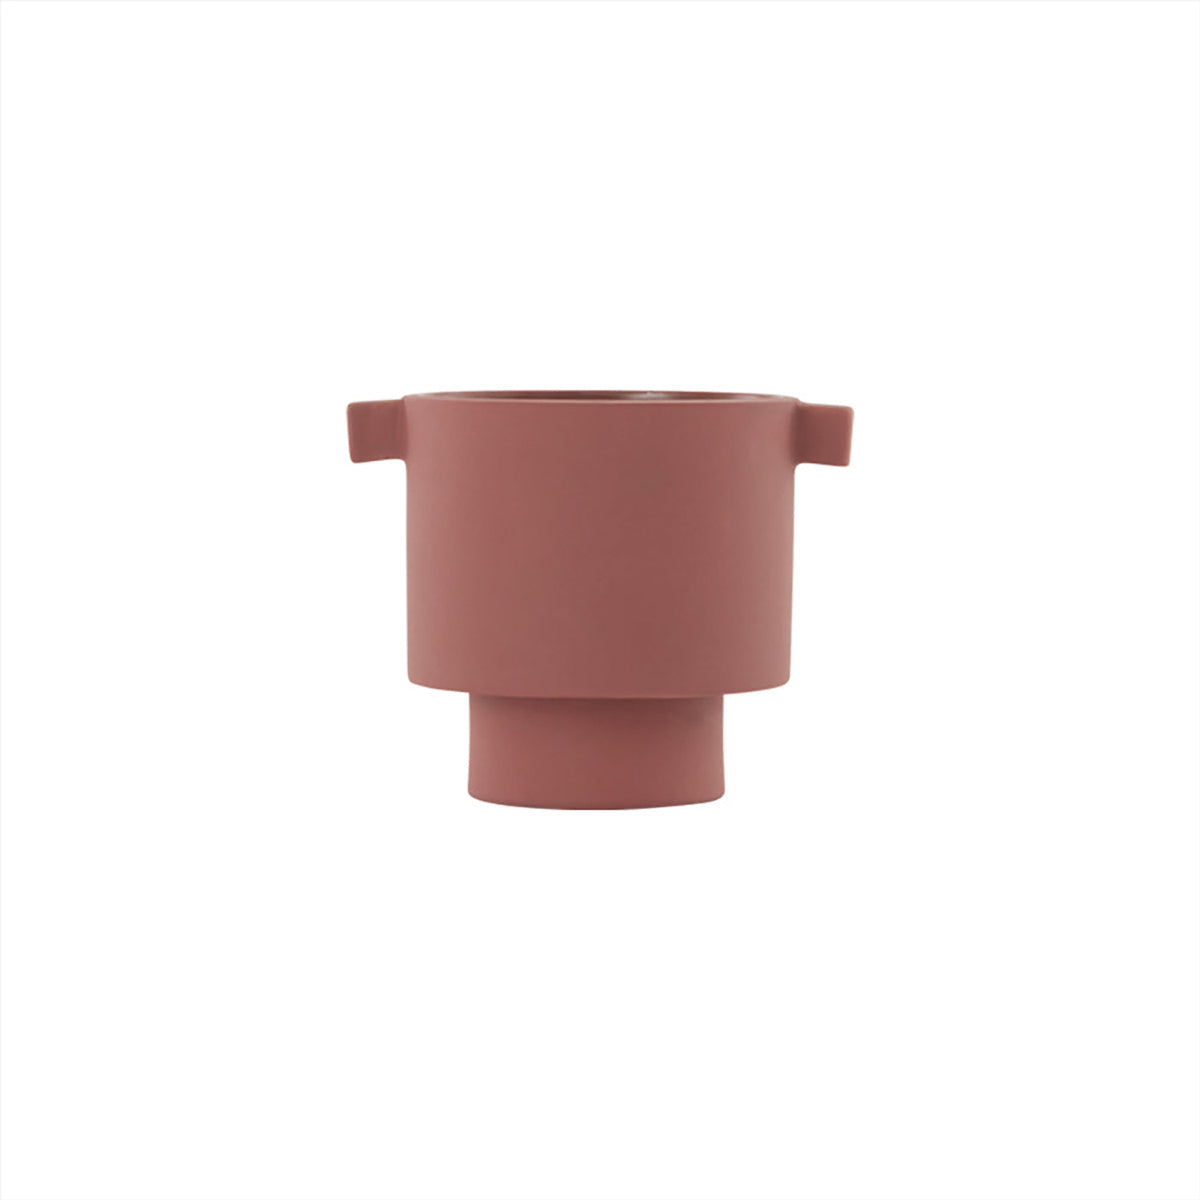 Load image into Gallery viewer, OYOY LIVING Inka Kana Pot - Small Vase 405 Sienna
